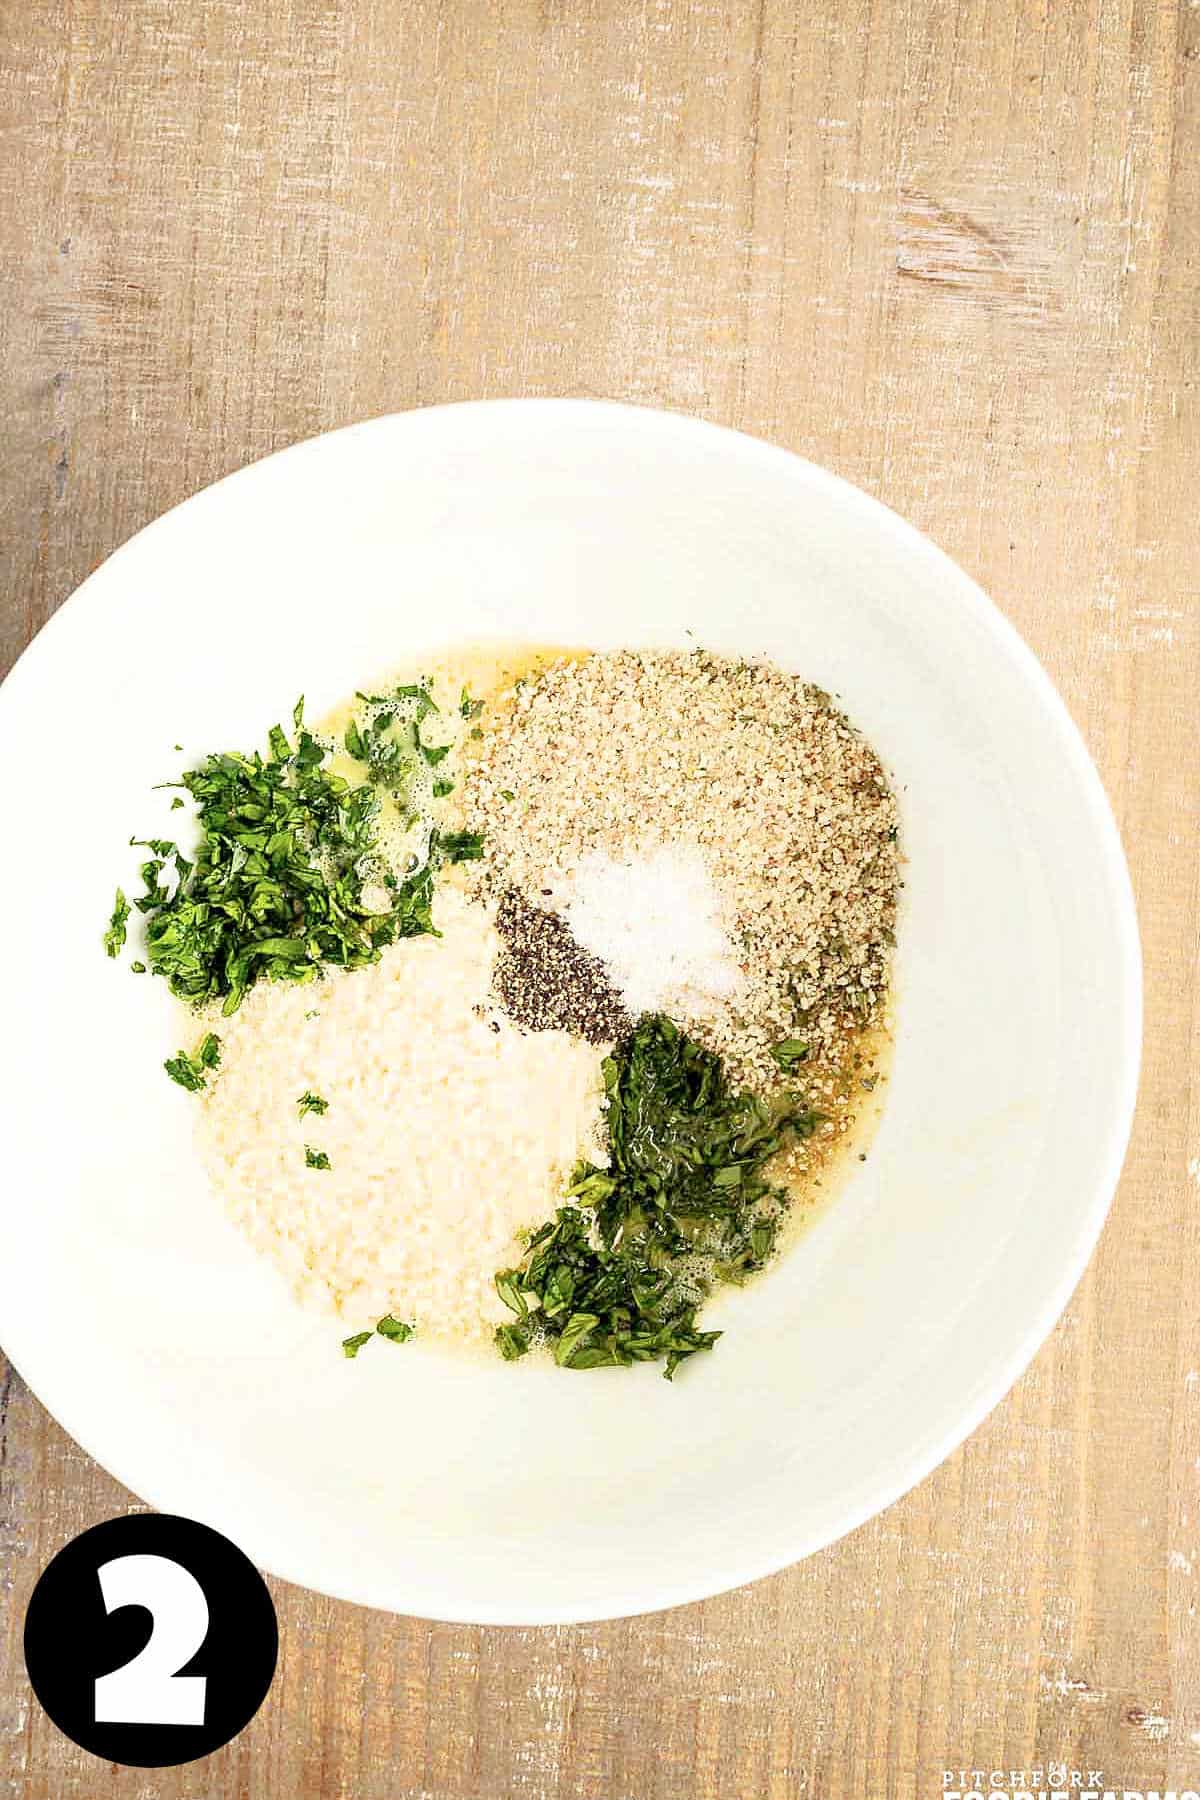 Parmesan cheese, herbs, breadcrumbs, and seasonings in a mixing bowl.